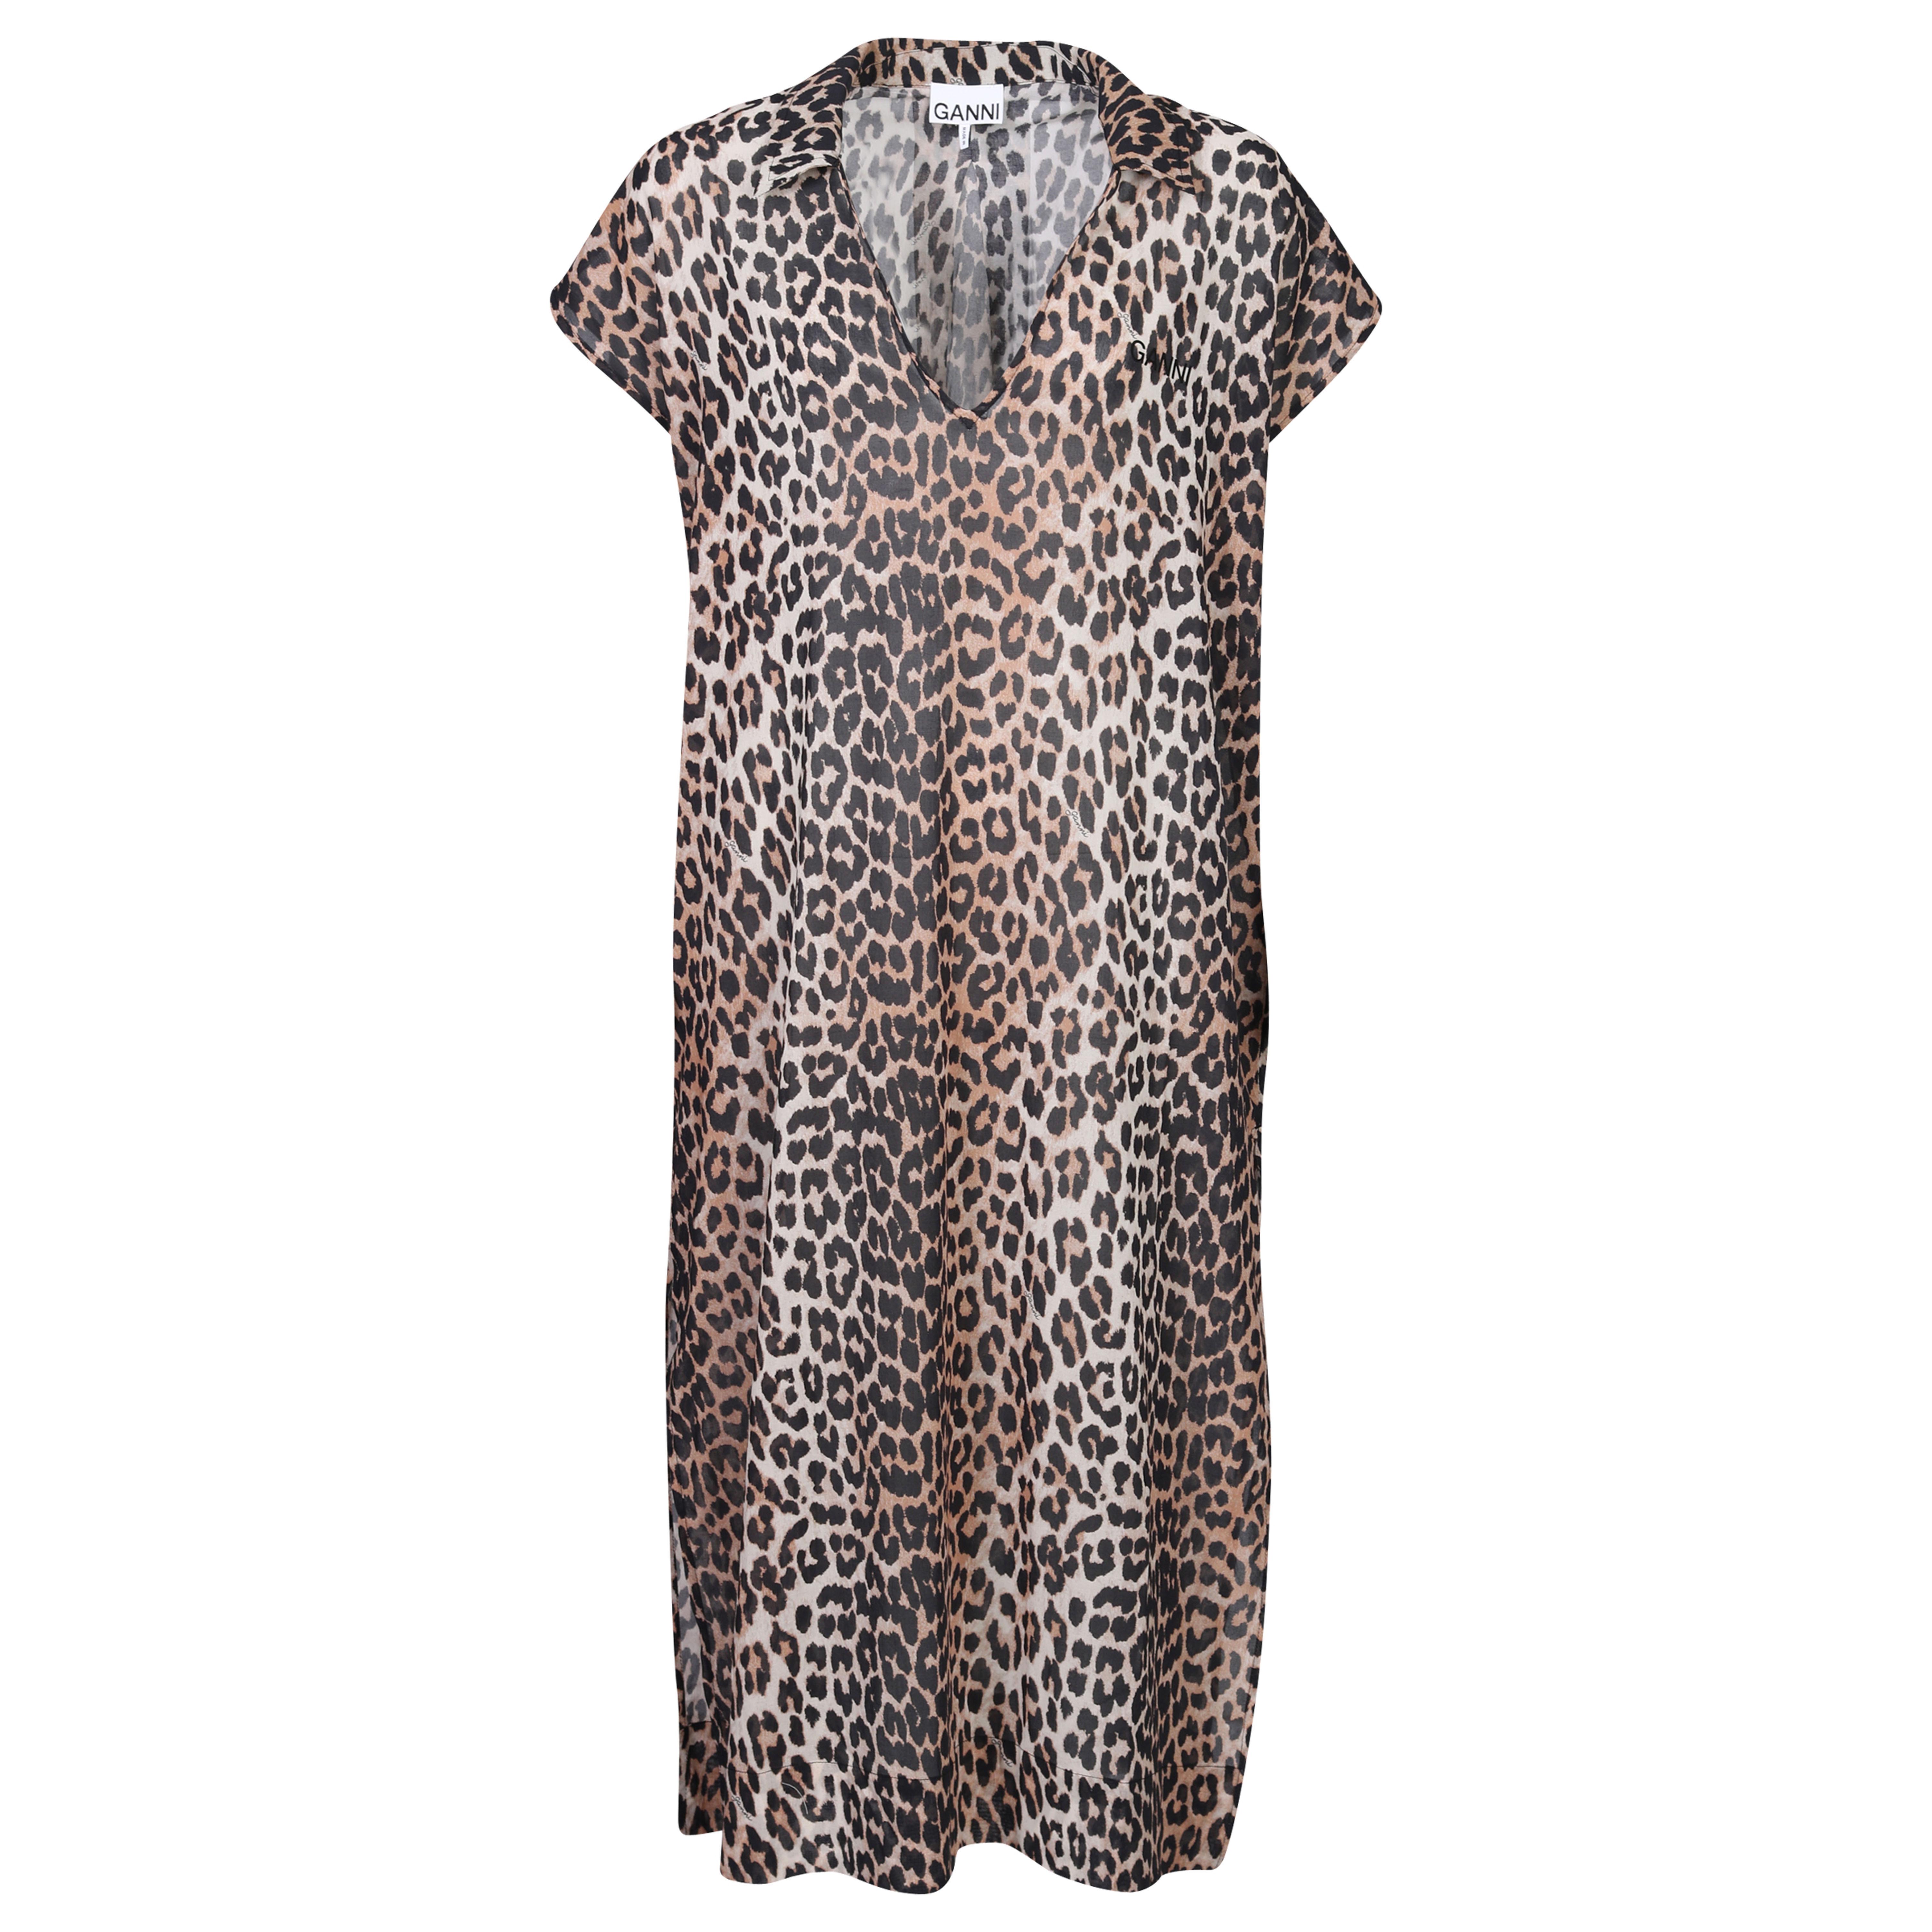 Ganni Light Cotton Kaftan Dress in Leopard S/M